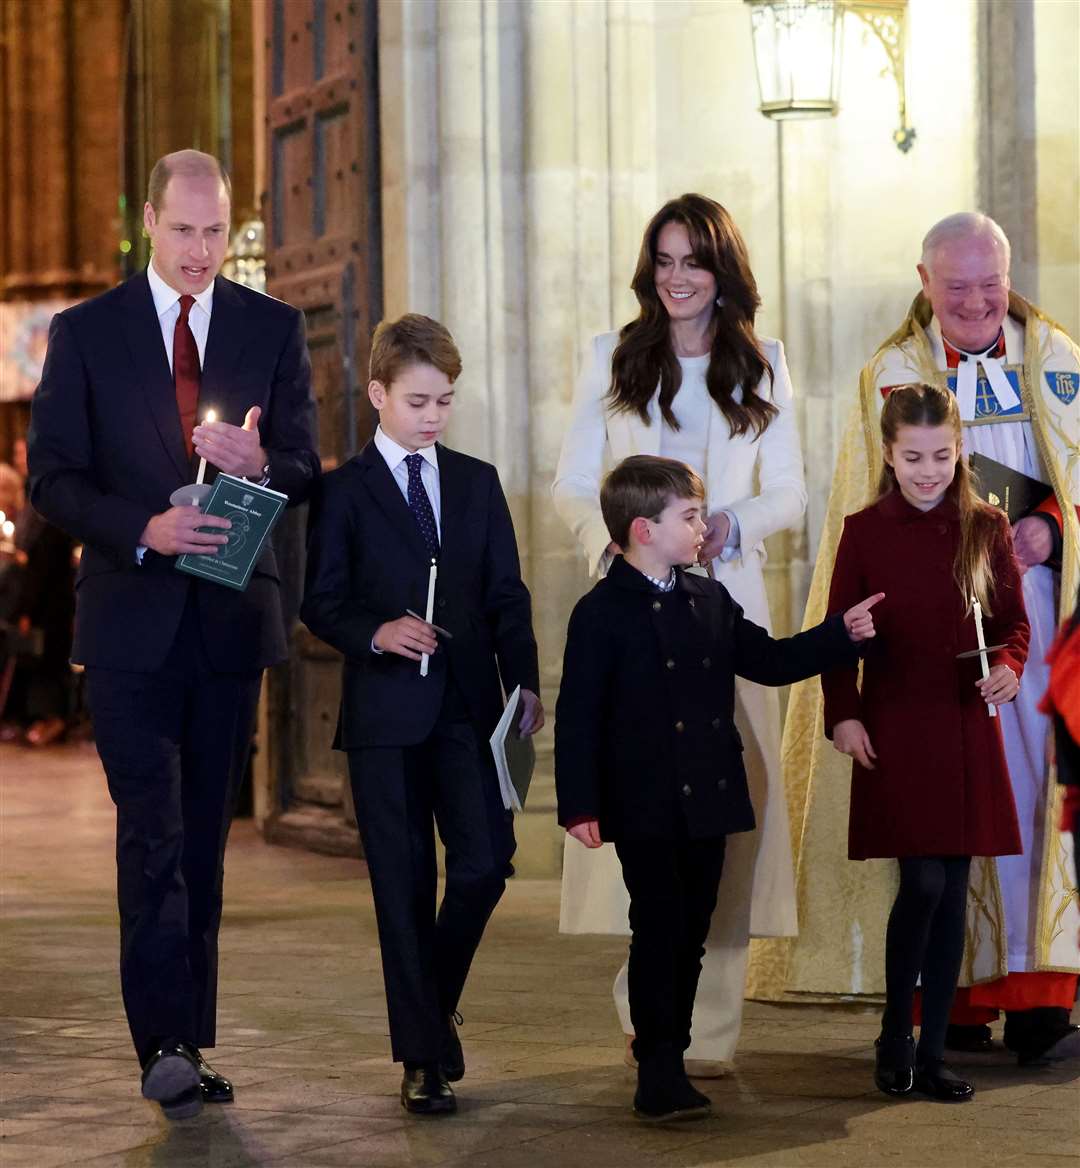 The Prince of Wales, Prince George, Prince Louis, the Princess of Wales and Princess Charlotte attended the carol service (Chris Jackson/PA)